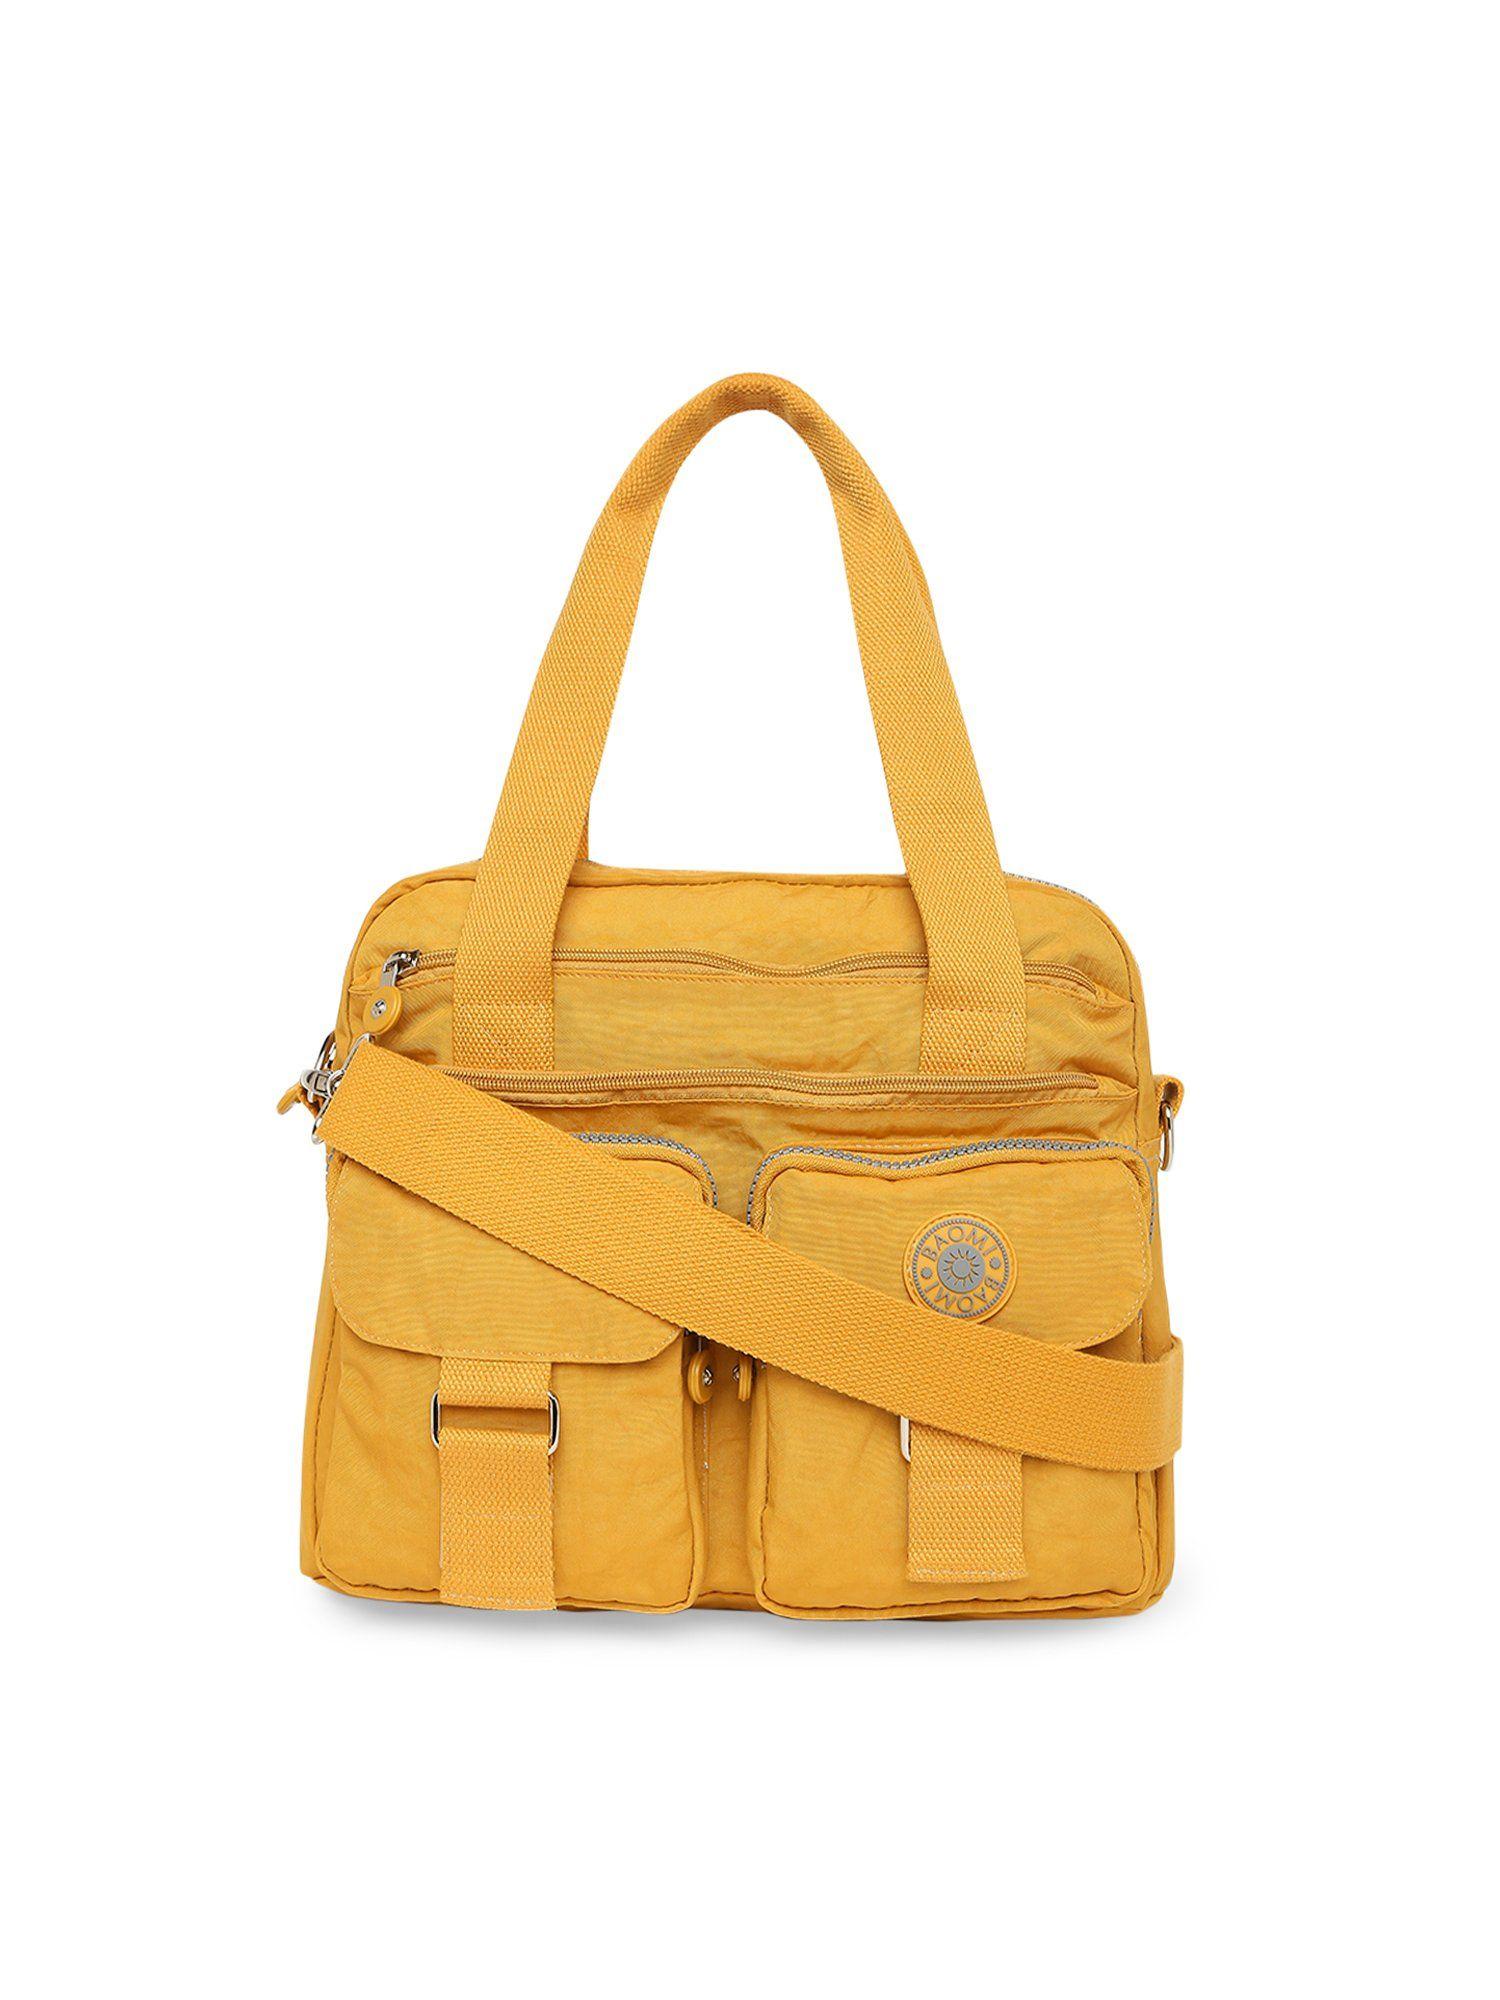 crinkle range yellow color soft case nylon handbag